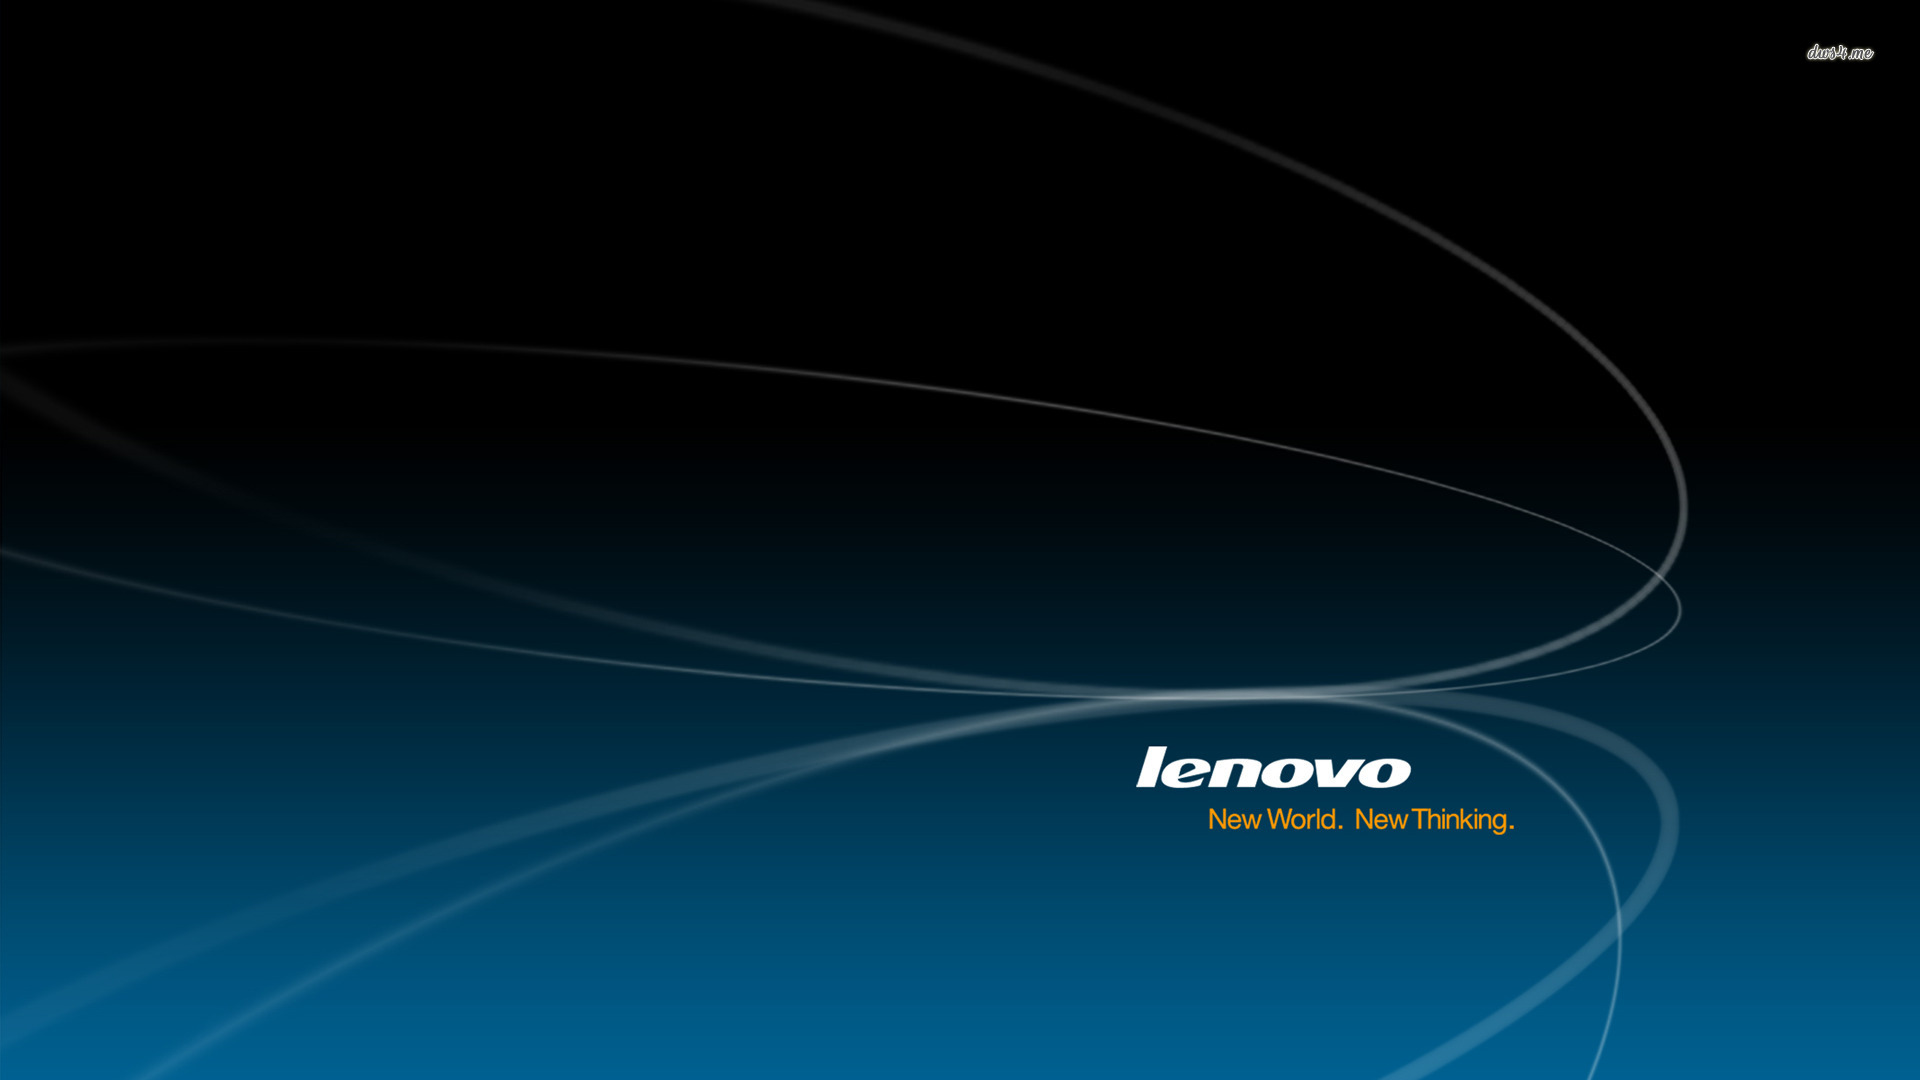 whatsapp download for lenovo laptop windows 10